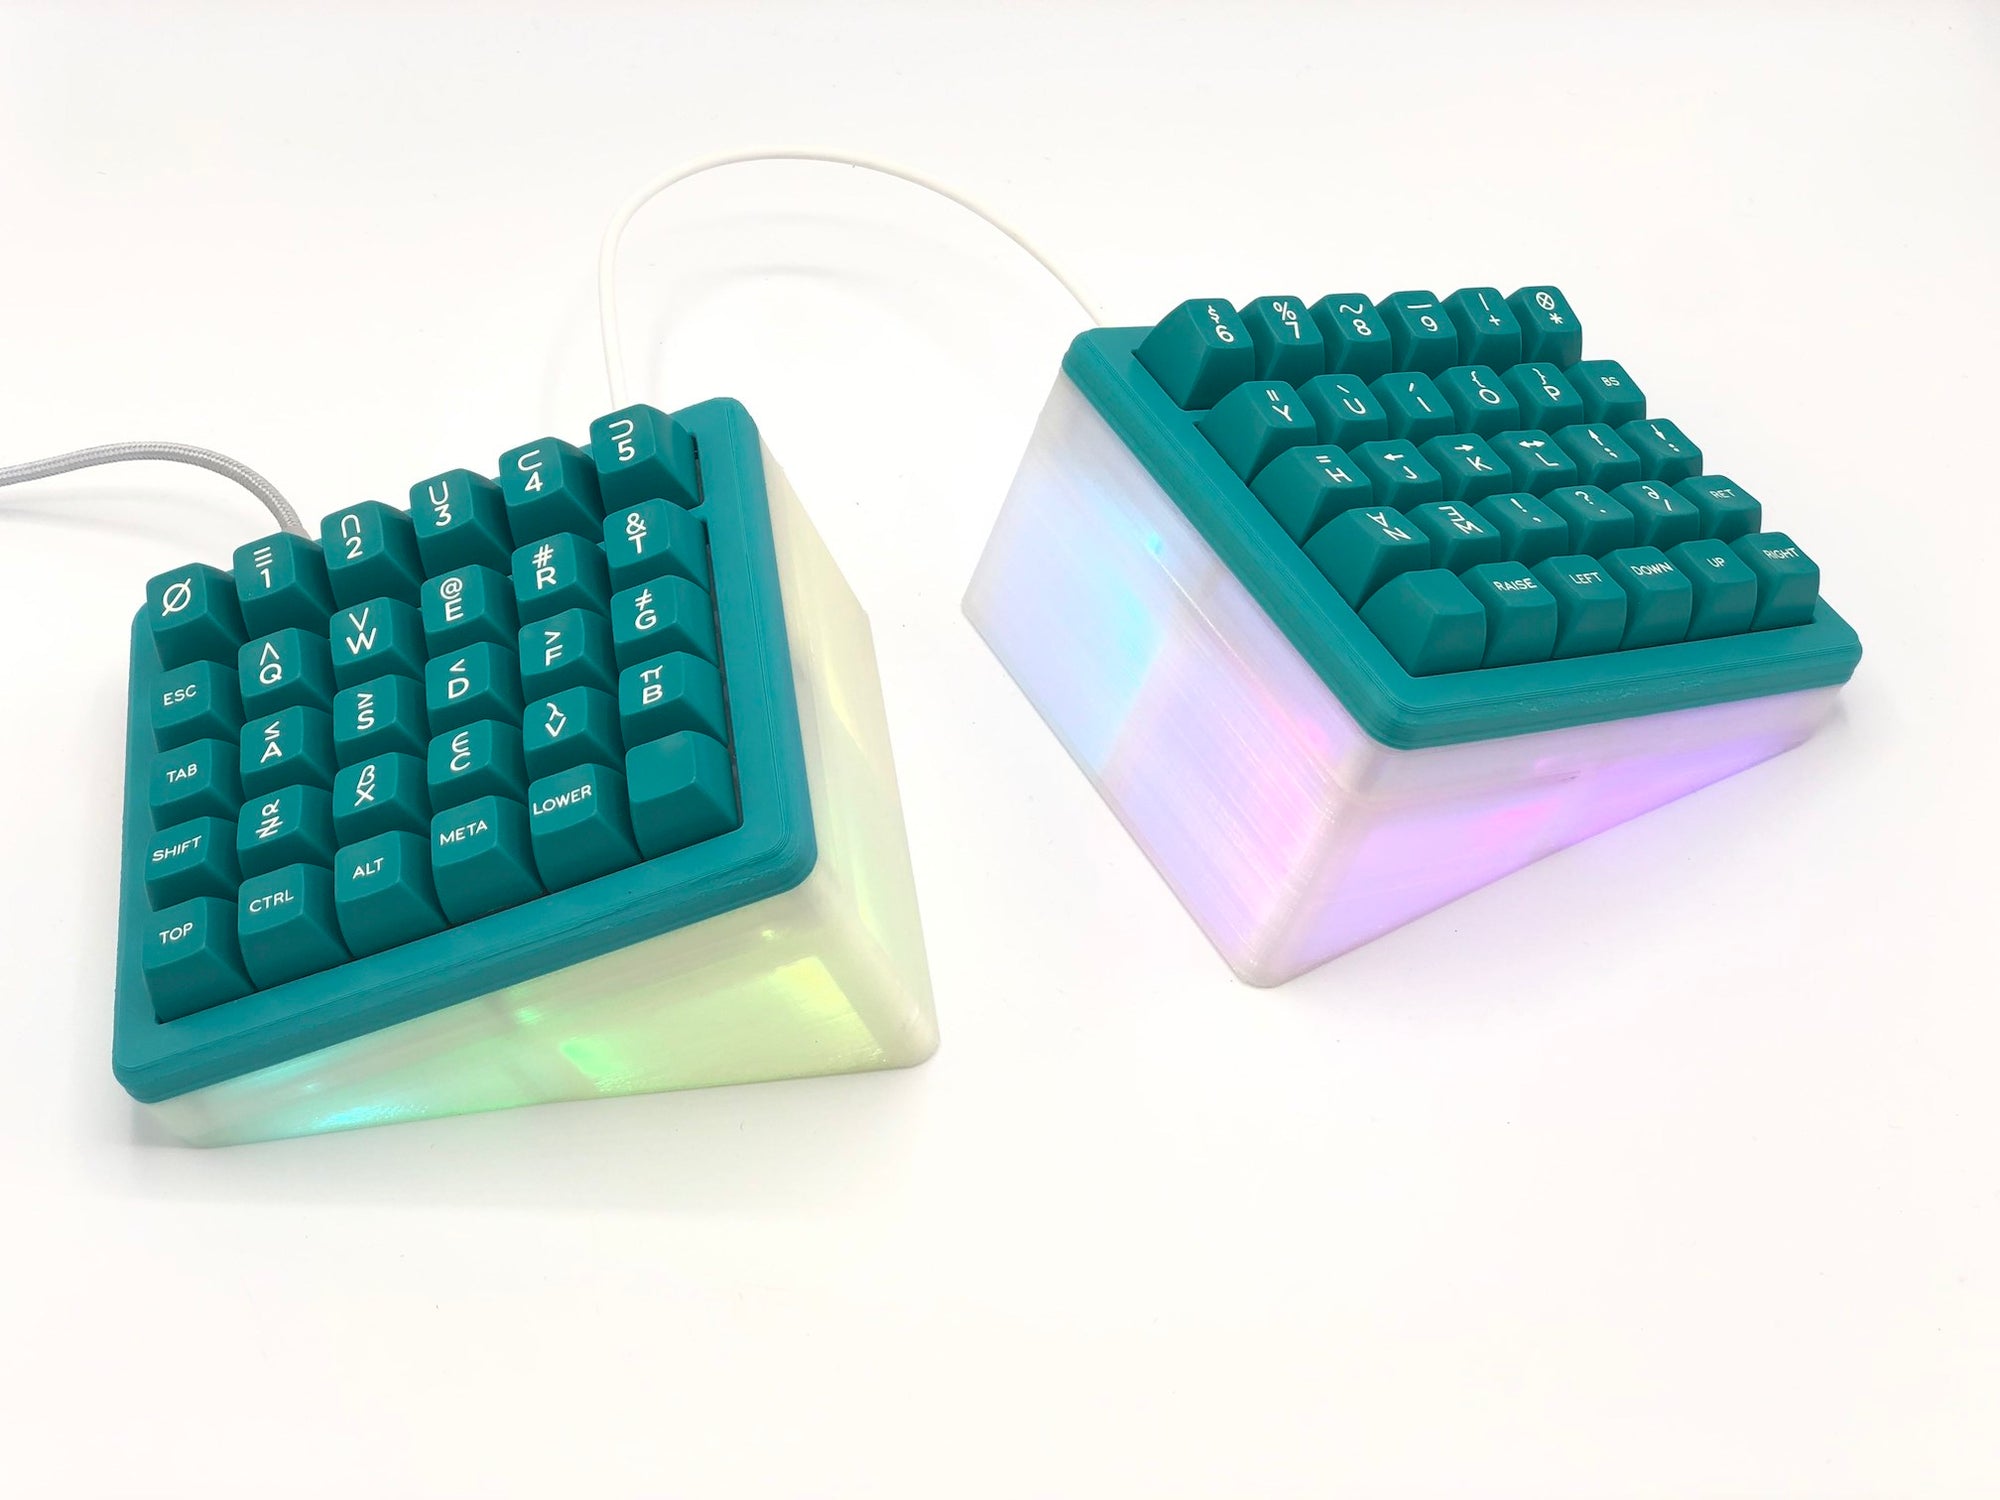 FFT - Split Ortholinear Keyboard